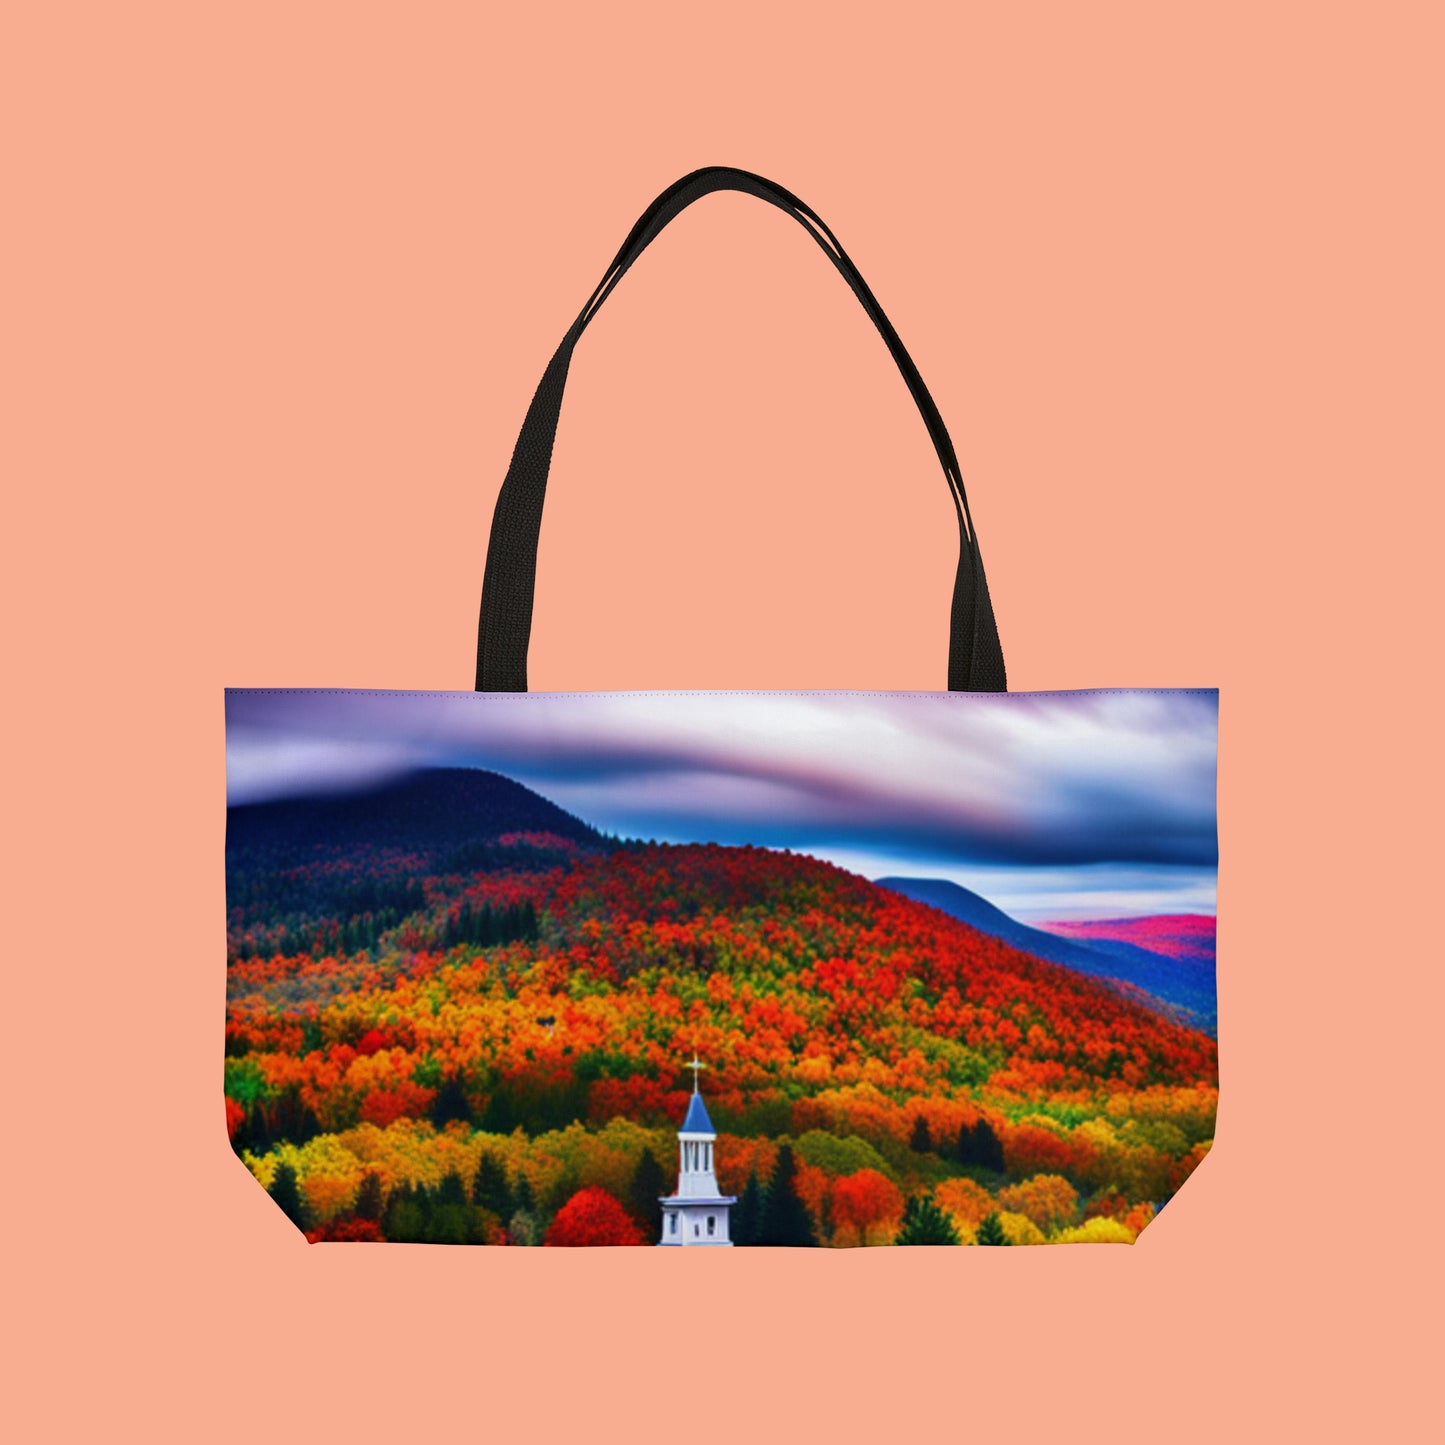 Beautiful fall foliage in their splendor on this beautiful Weekender Tote Bag.